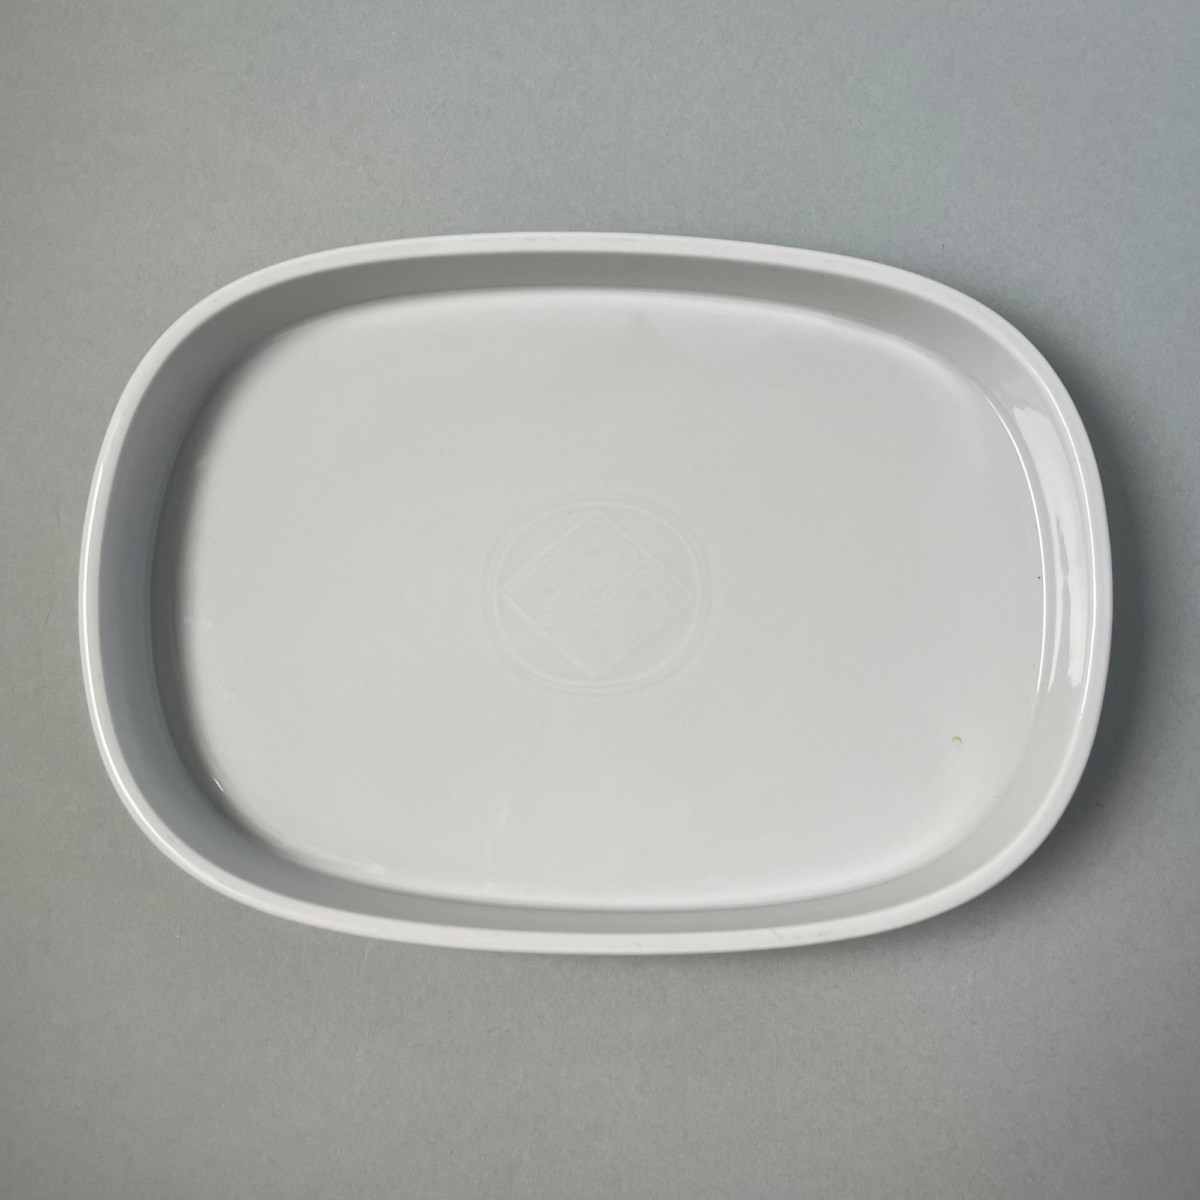 OthersROYAL COPENHAGEN Gertrude Vasegaard / Oval plate